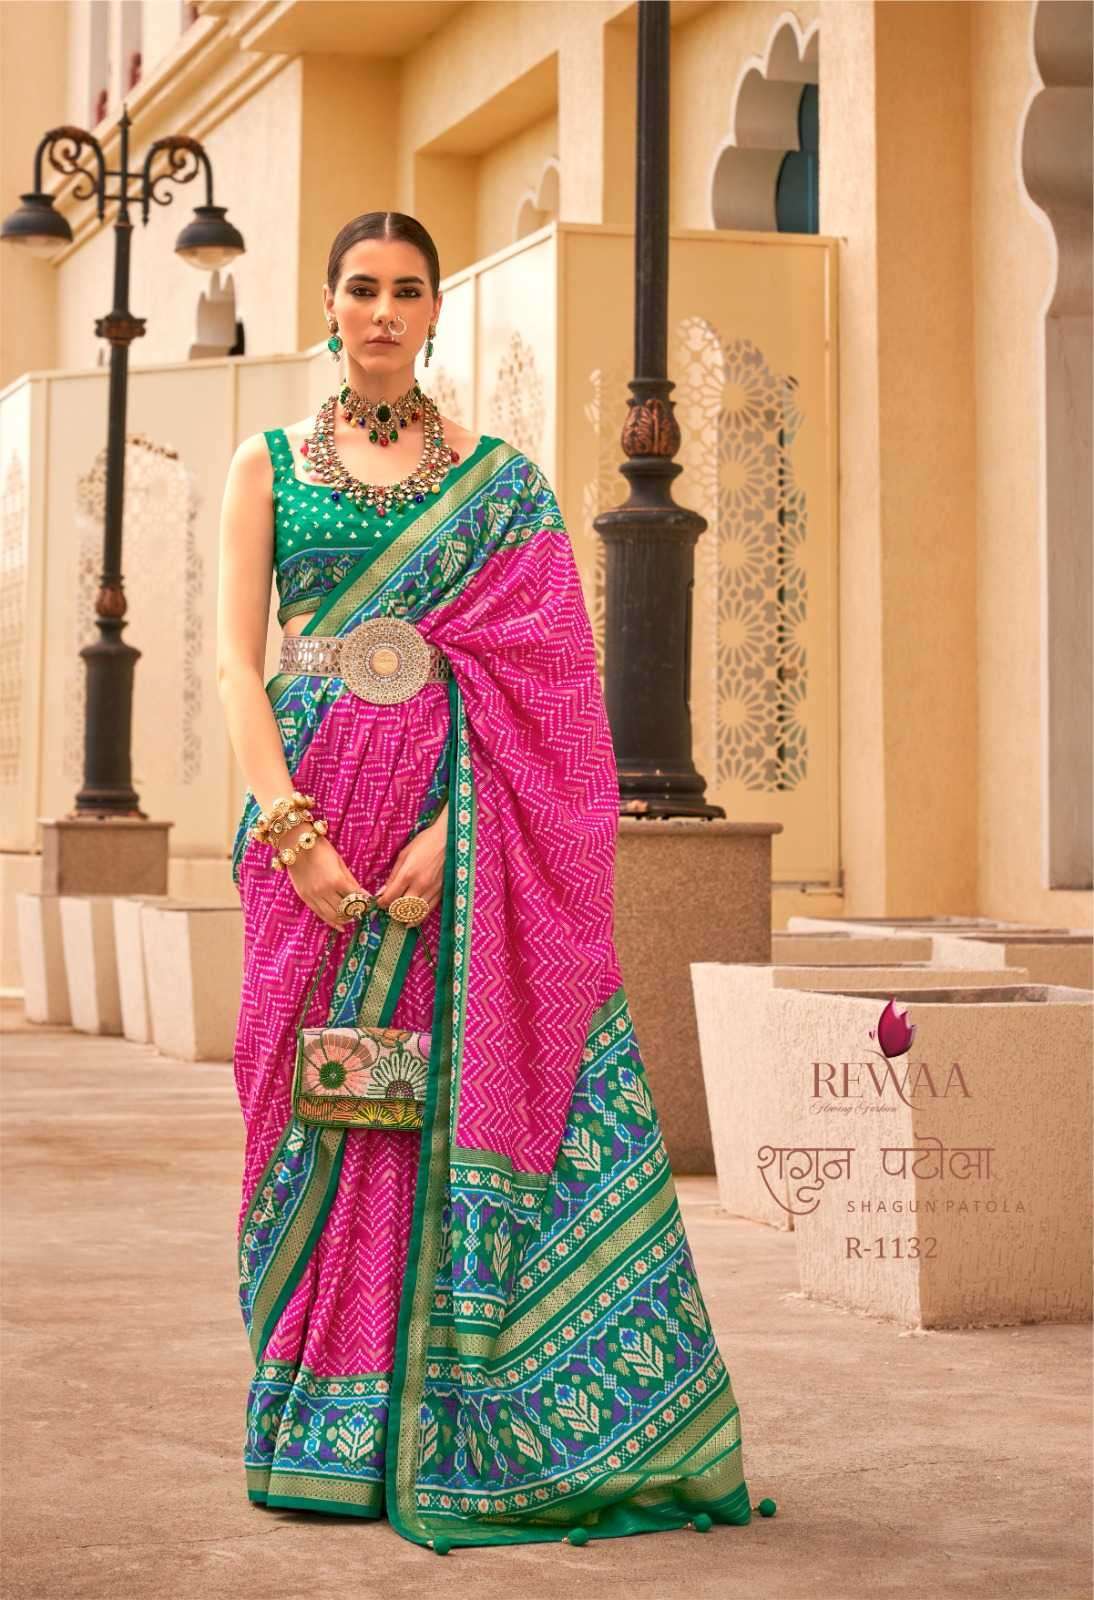 Rewaa Fashion Shagun Patola Design Party wear saree collection at best rate